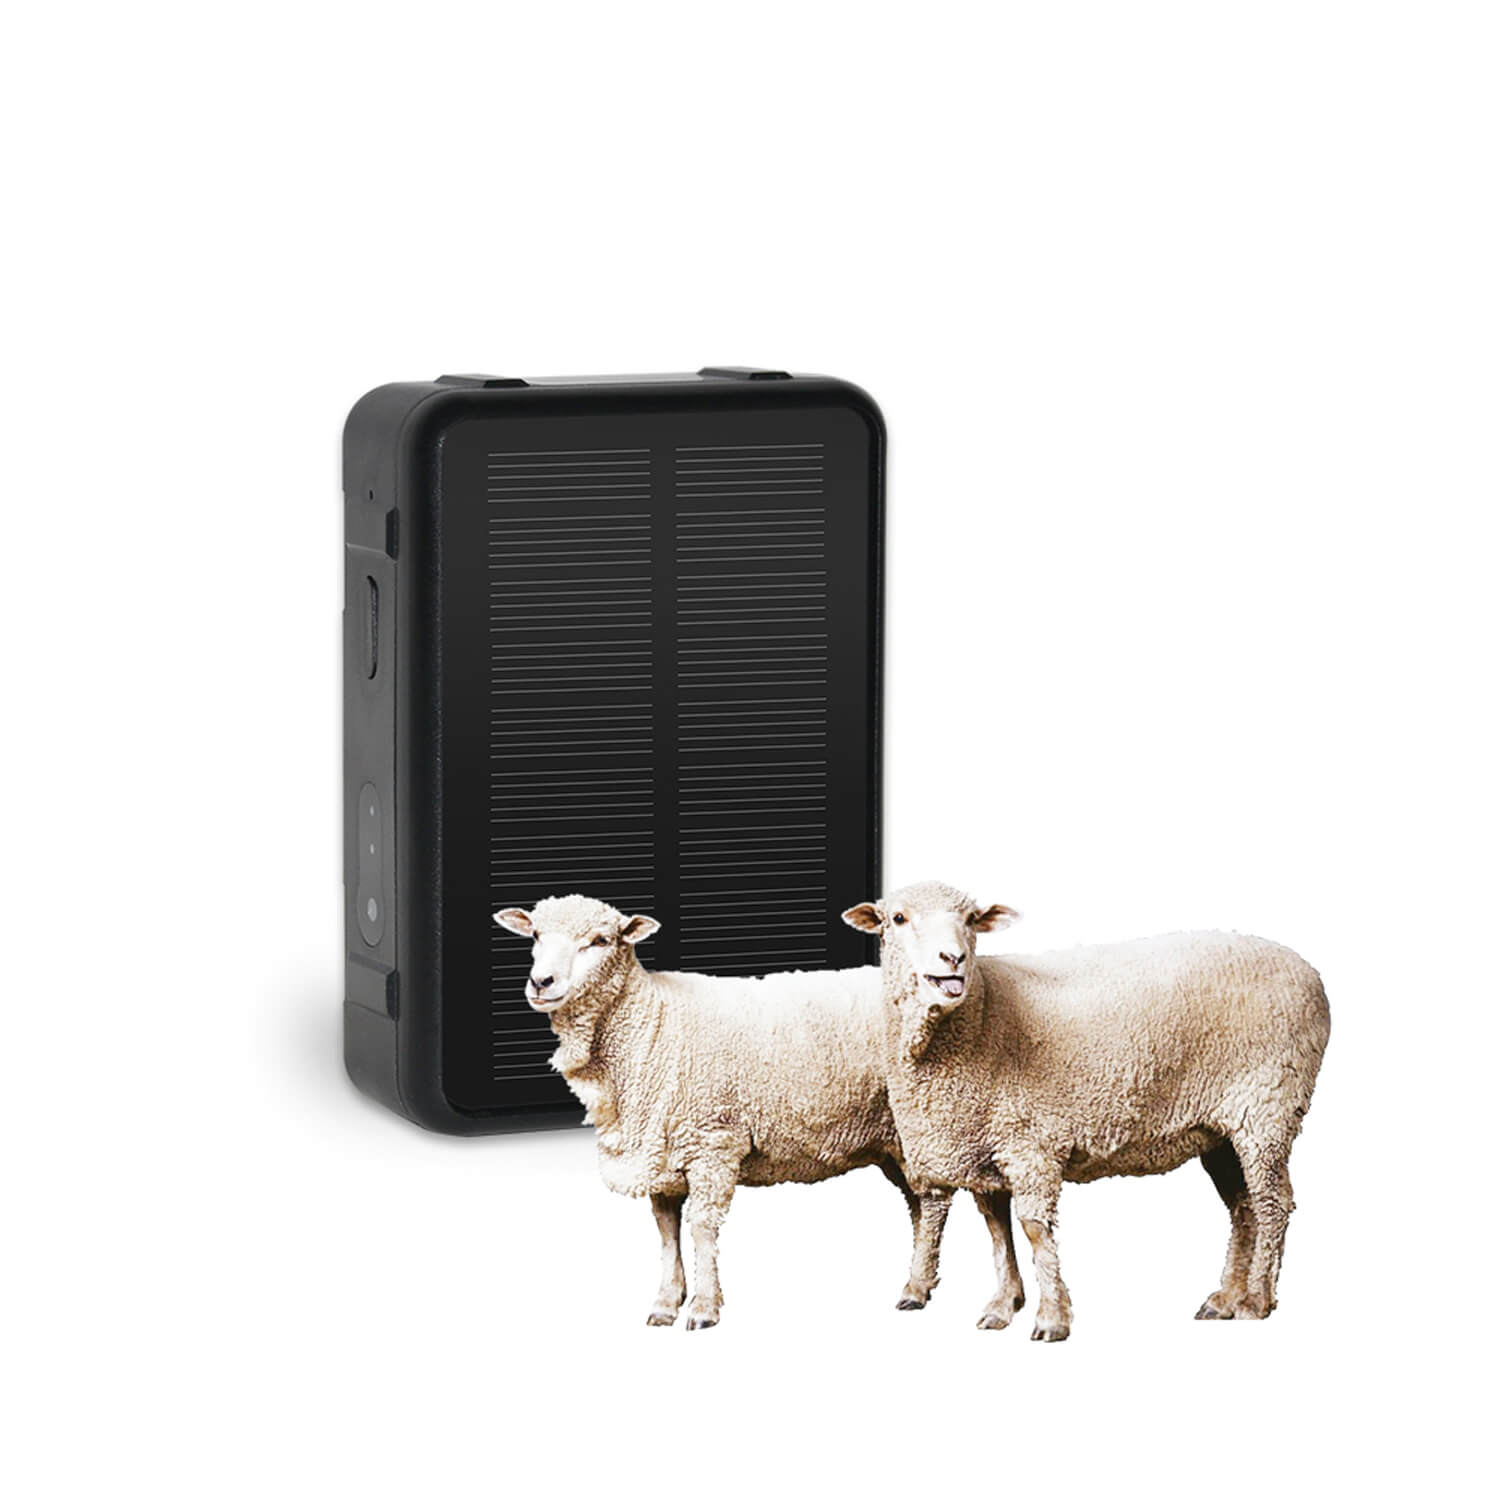 4G LTE Solar Charging Cow Cattle Tracker GPS V44